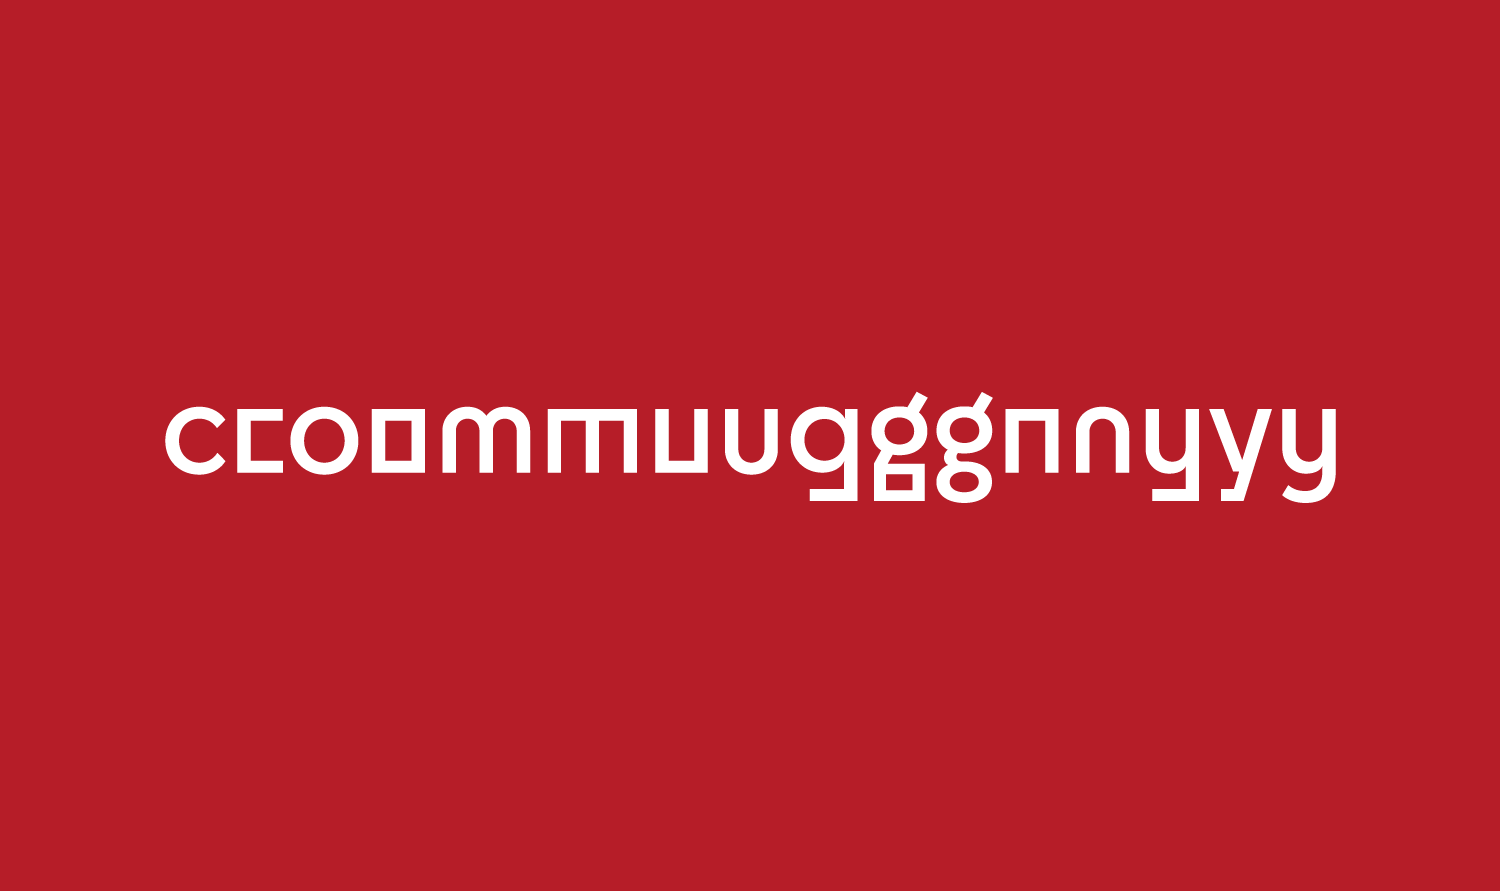 OQIO_Portfolio-Commune-Commugny_Typographie